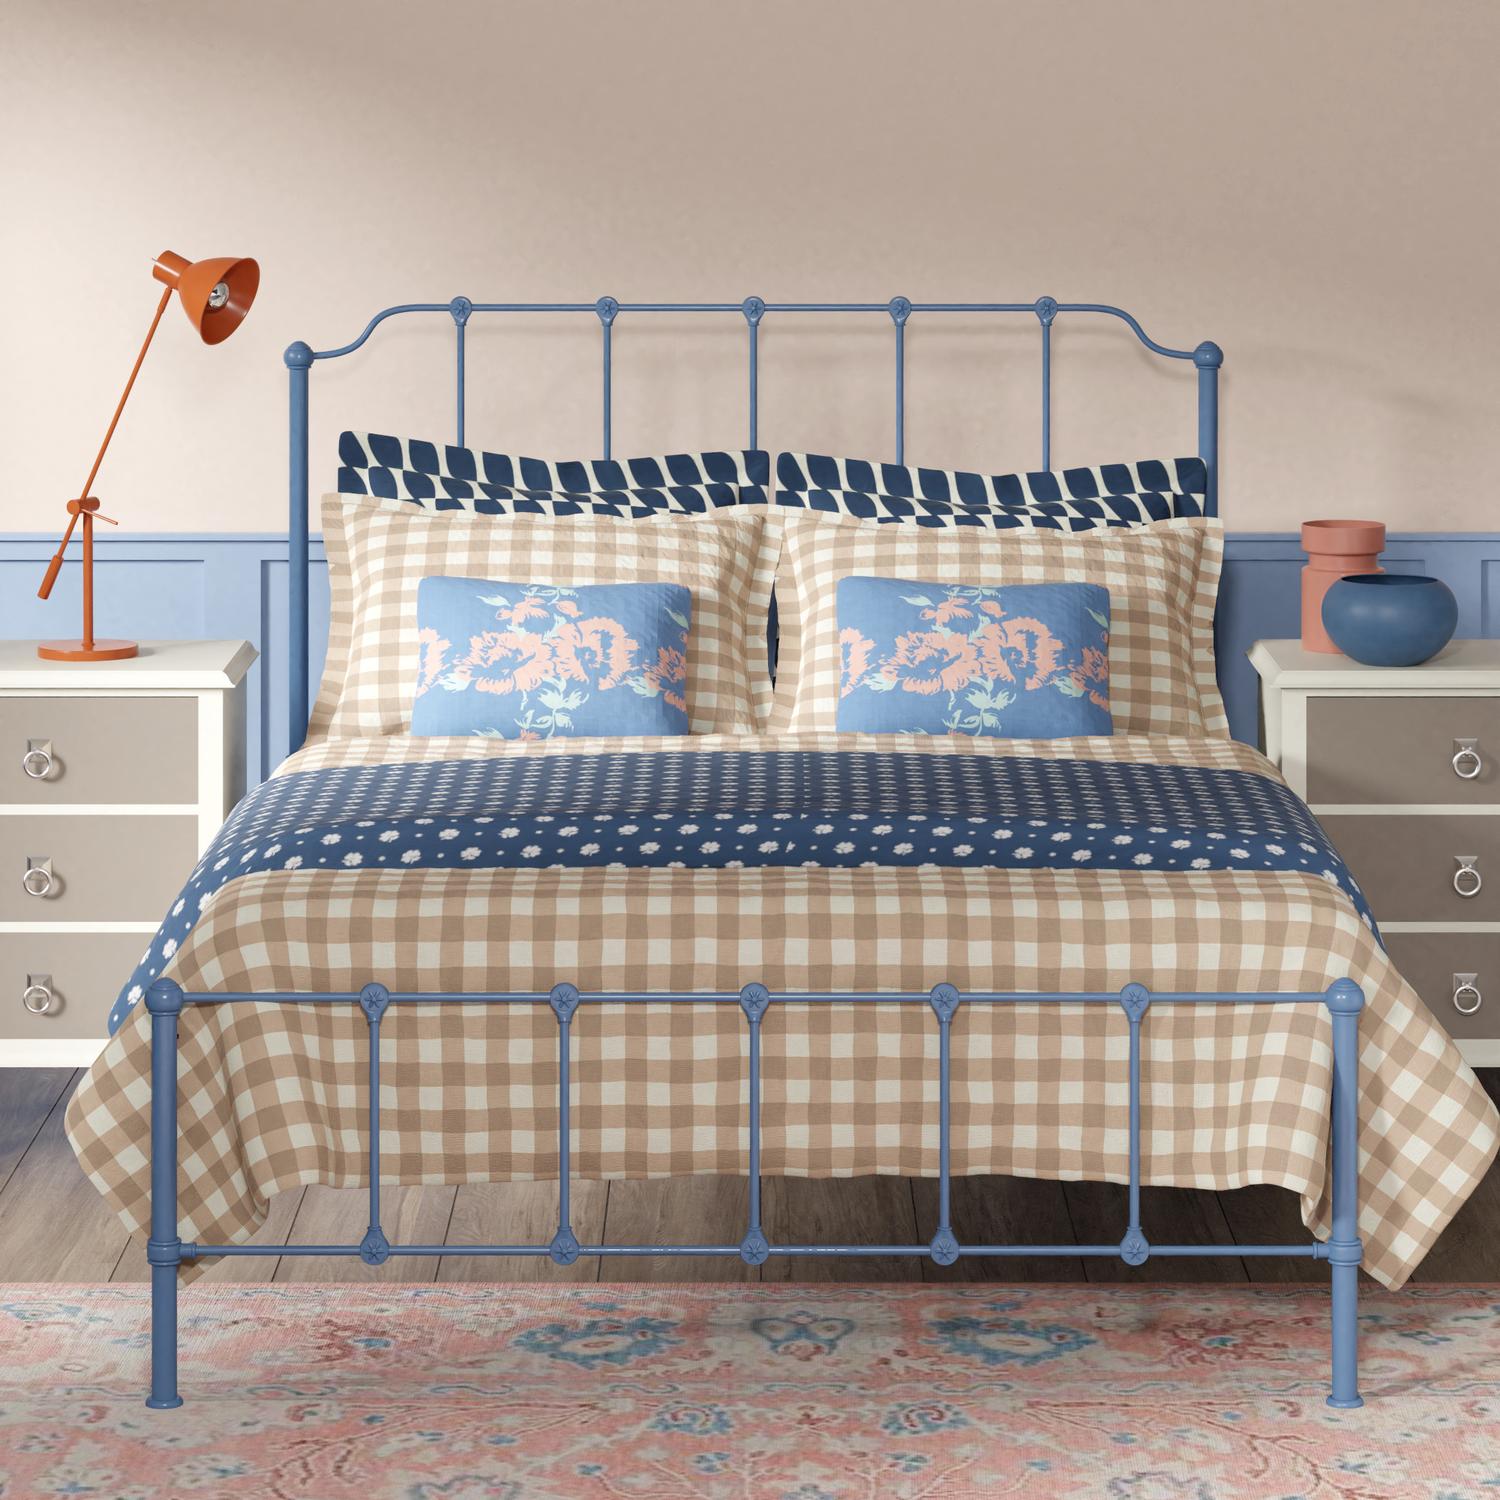 Julia iron bed - Blue and orange bedroom